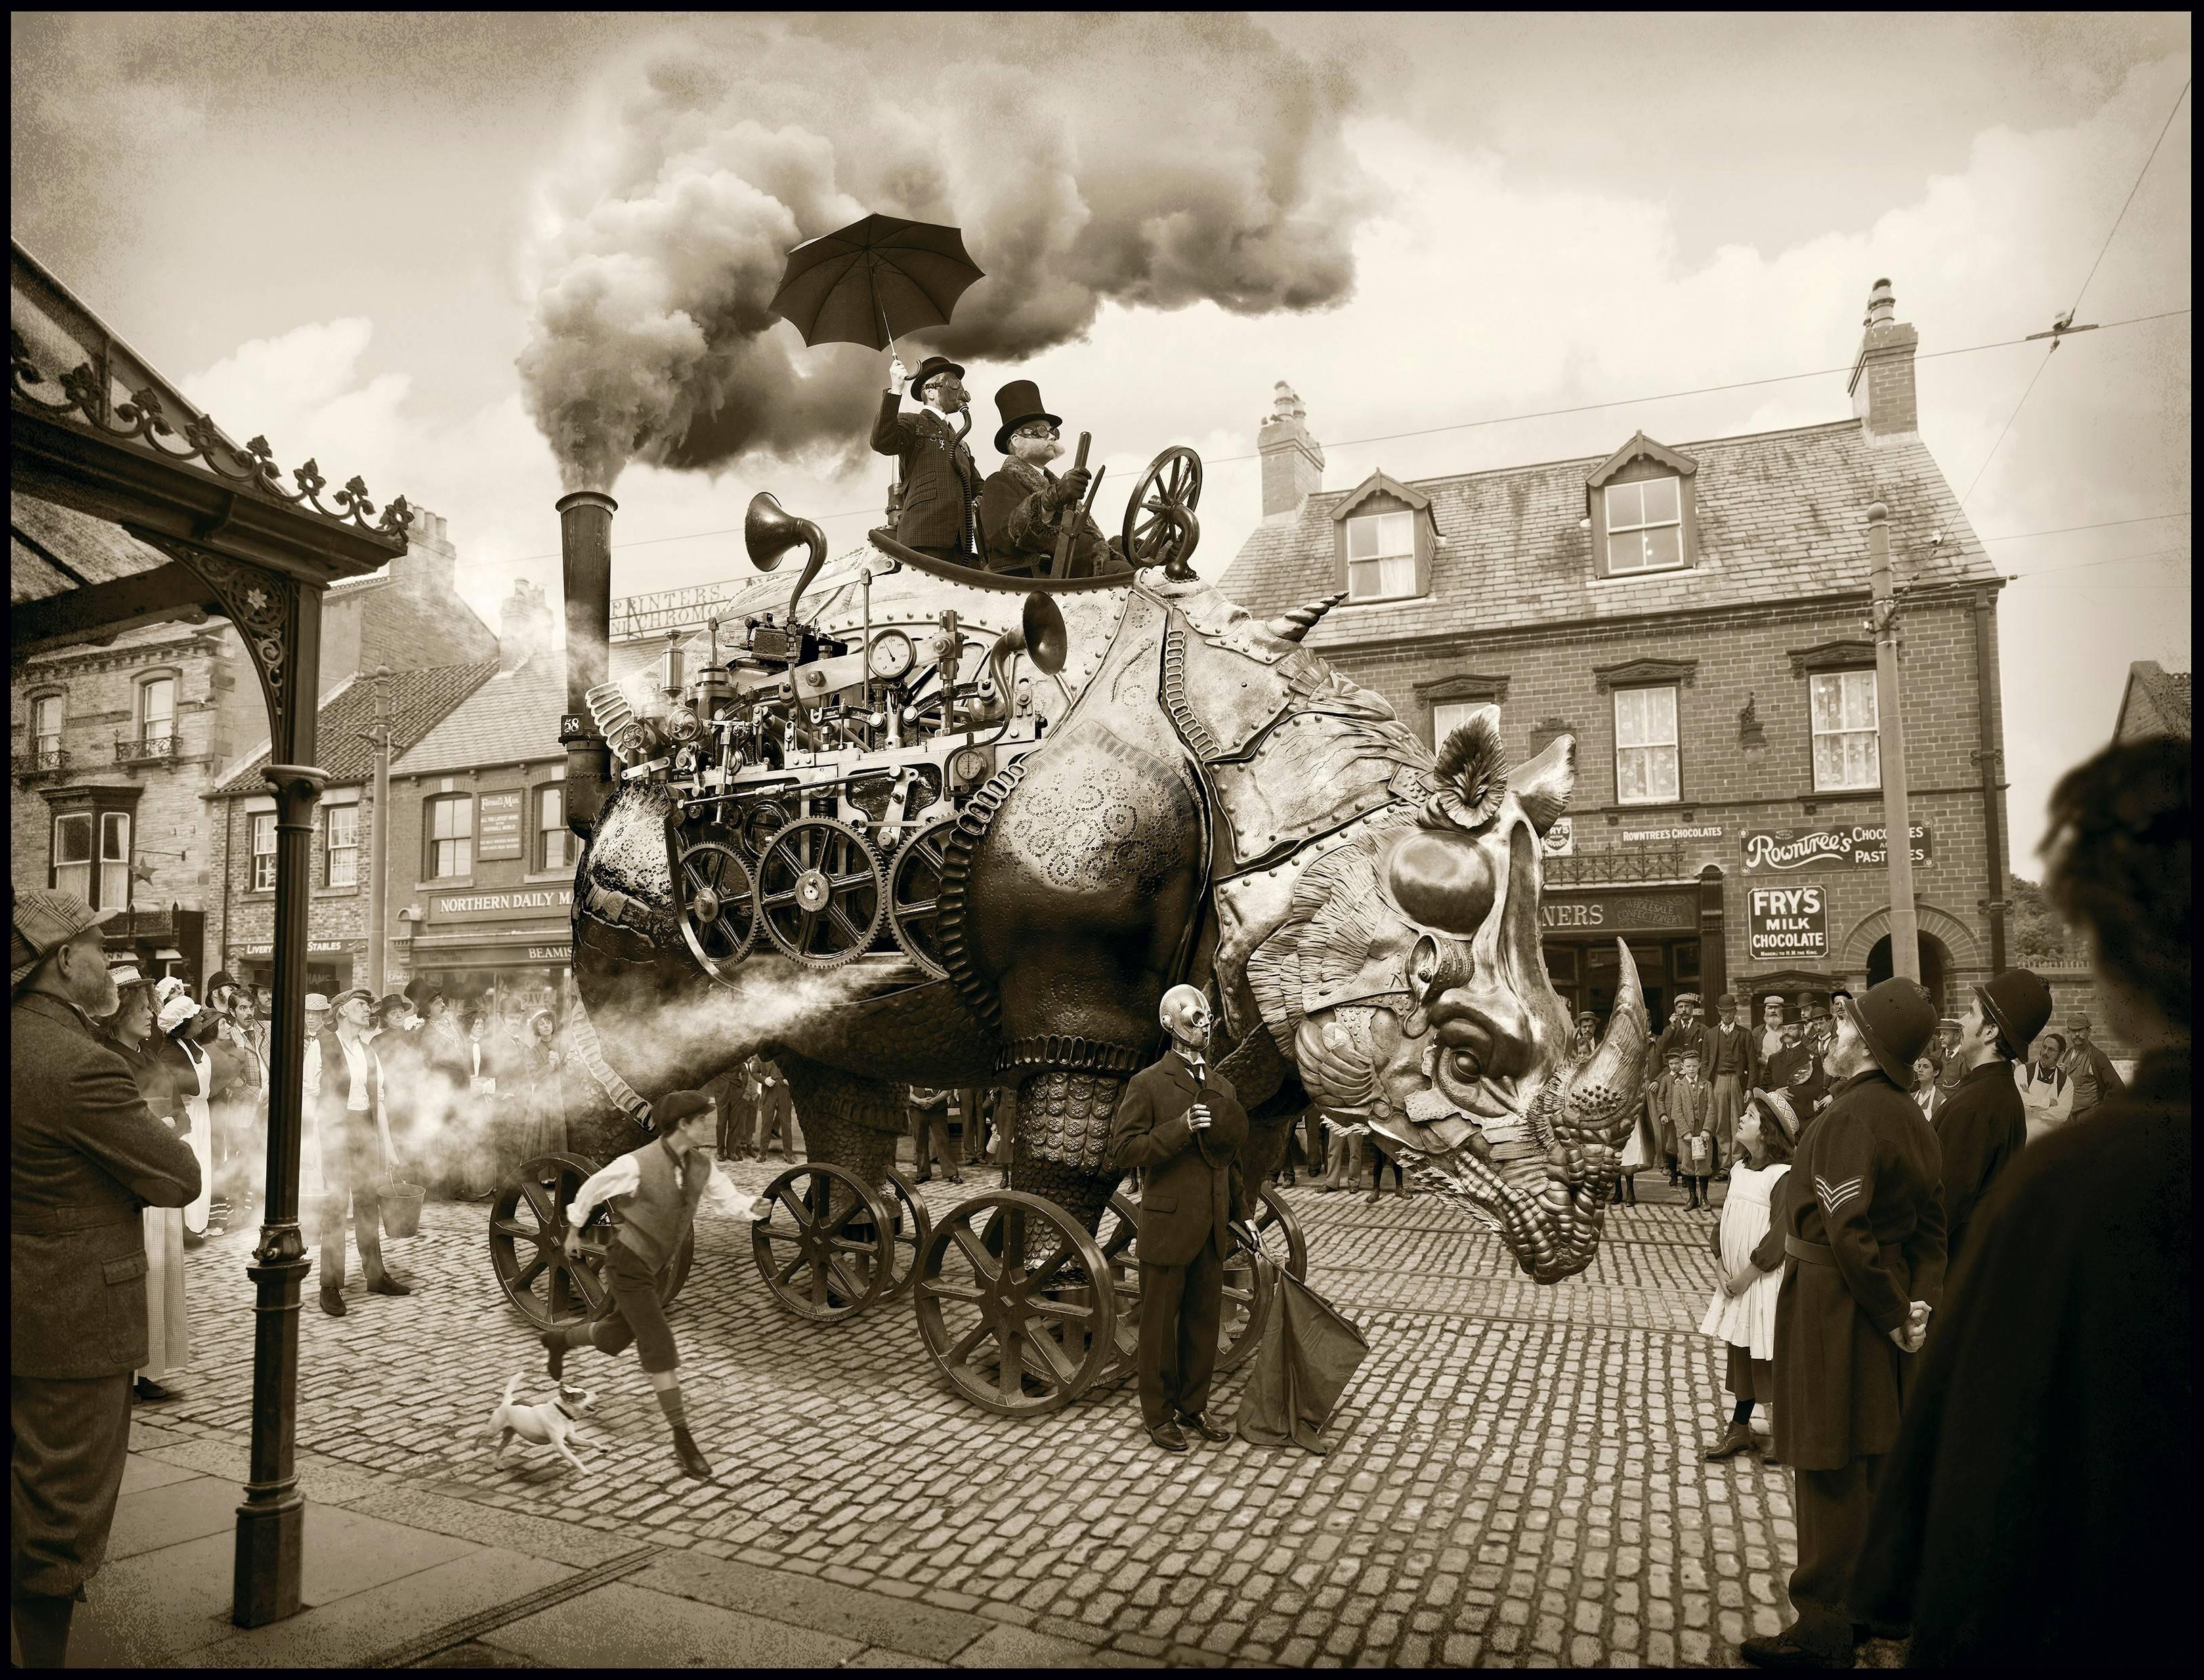 The Astonishing Steam Rhinomotive (Surreal Antique-Style Manipulated Photograph